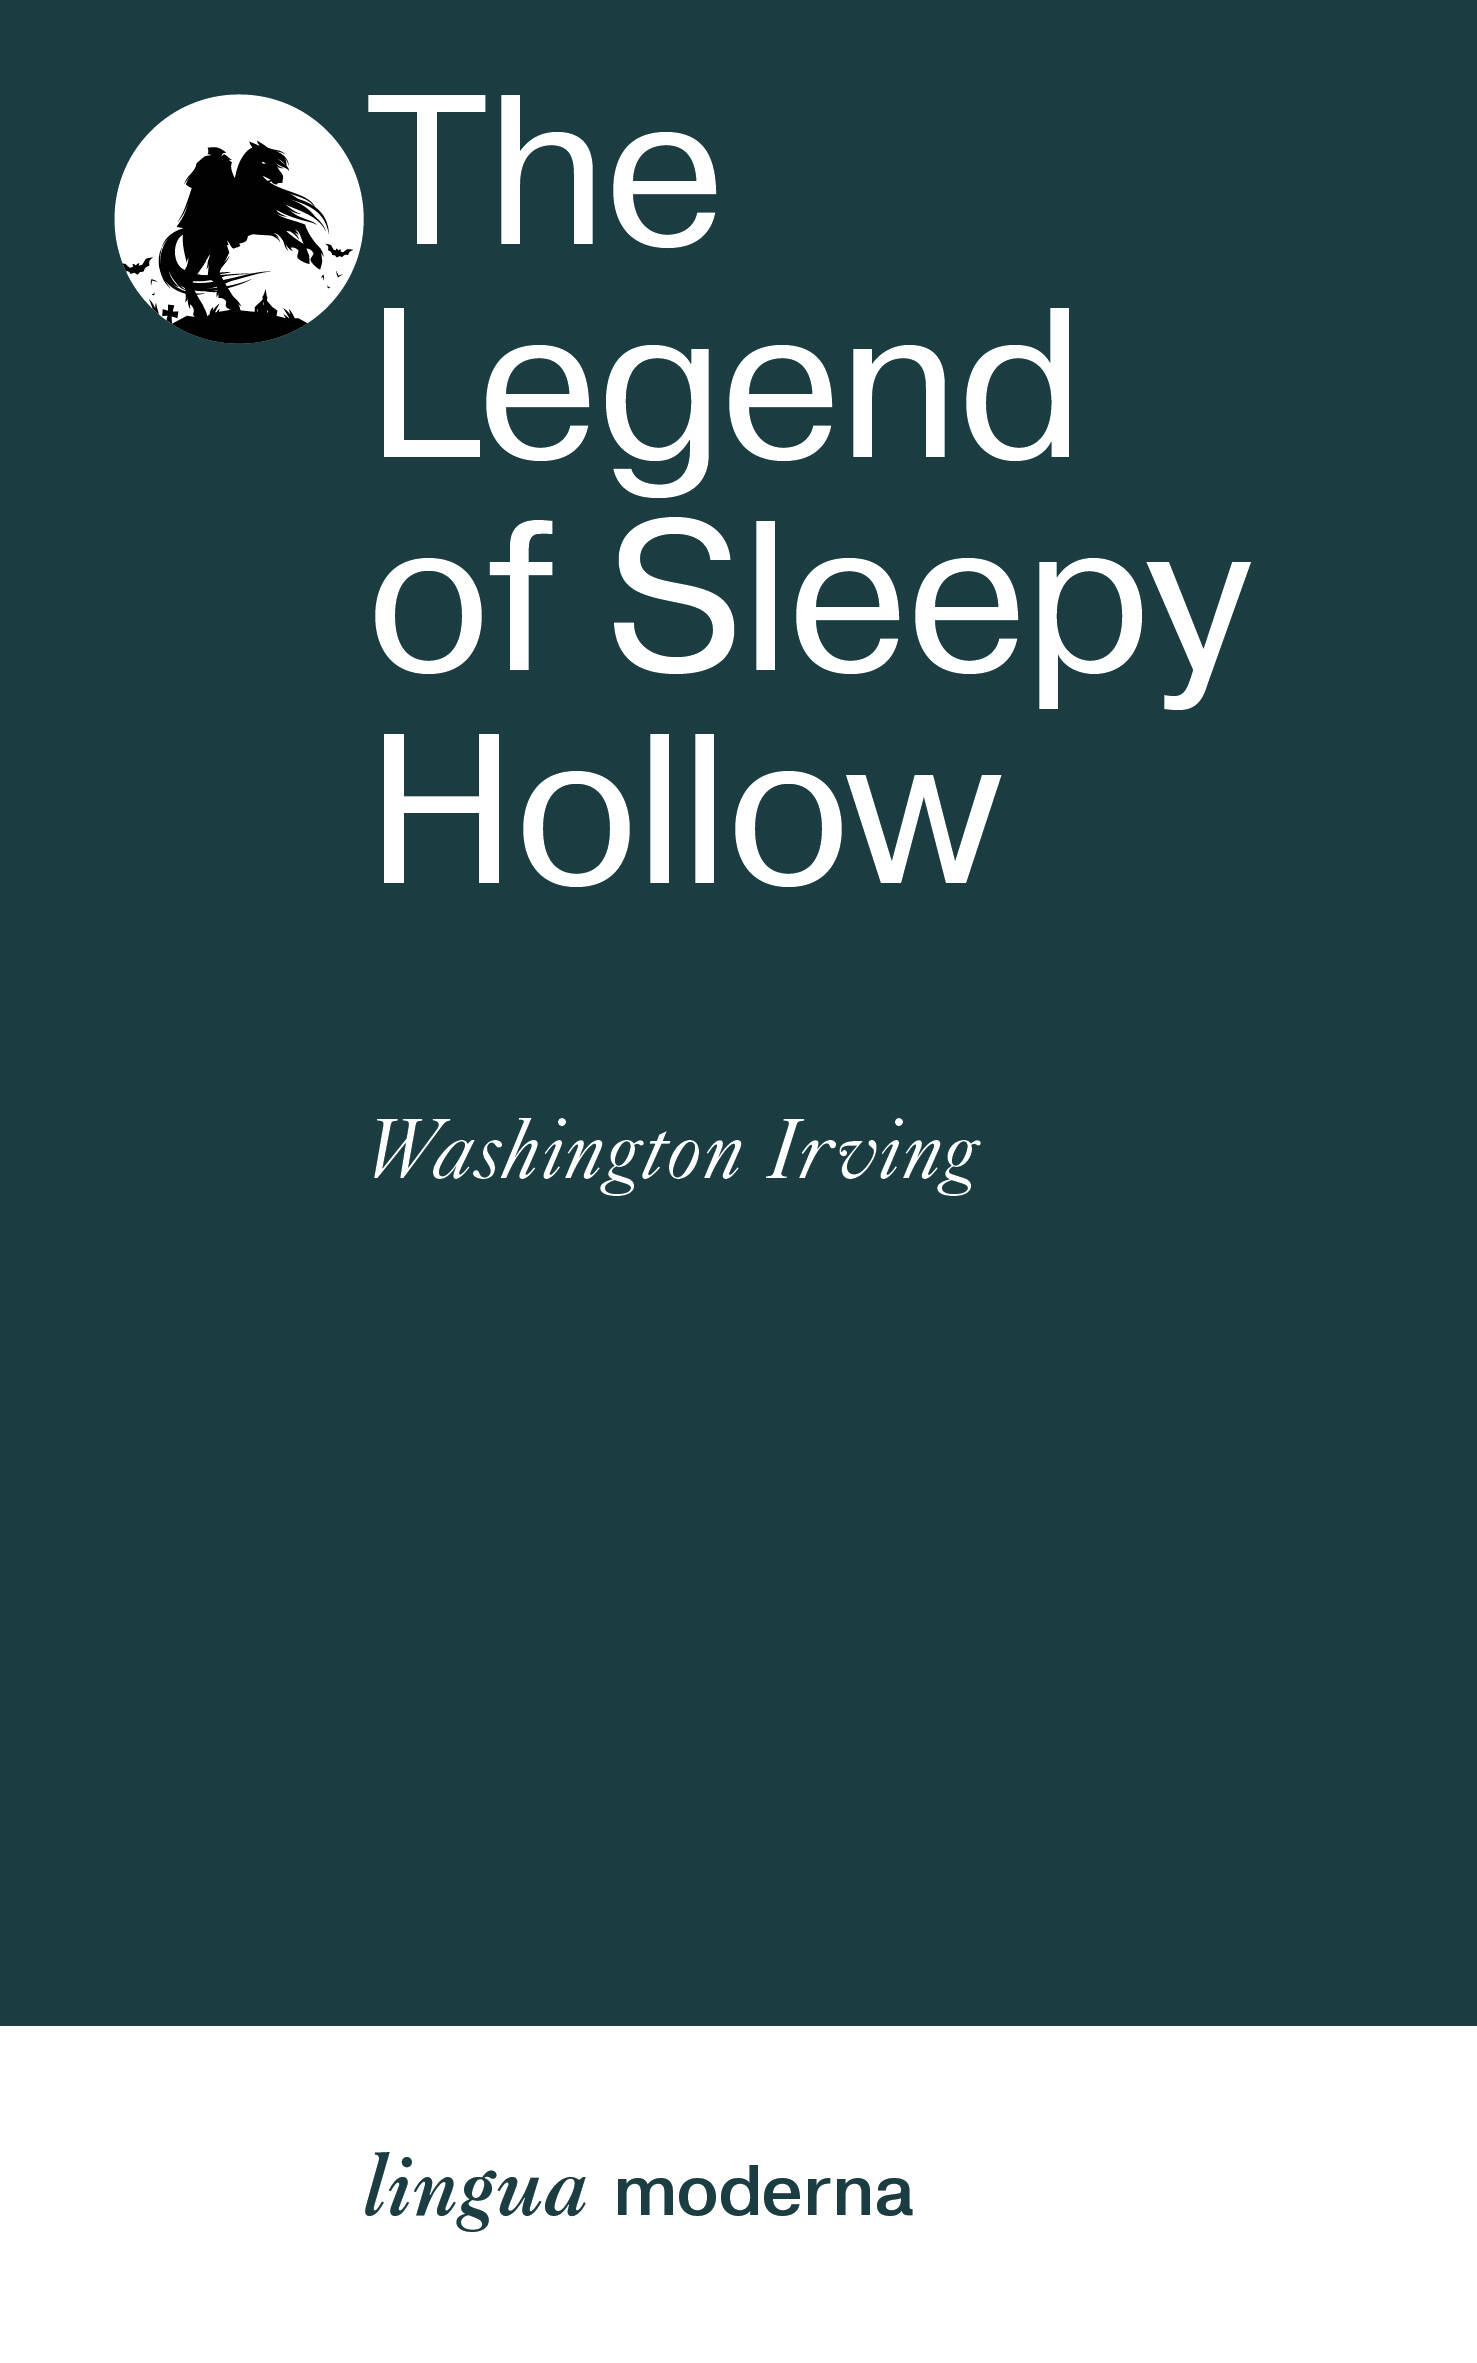 decandido k sleepy hollow children of revolution Irving Washington The Legend of Sleepy Hollow